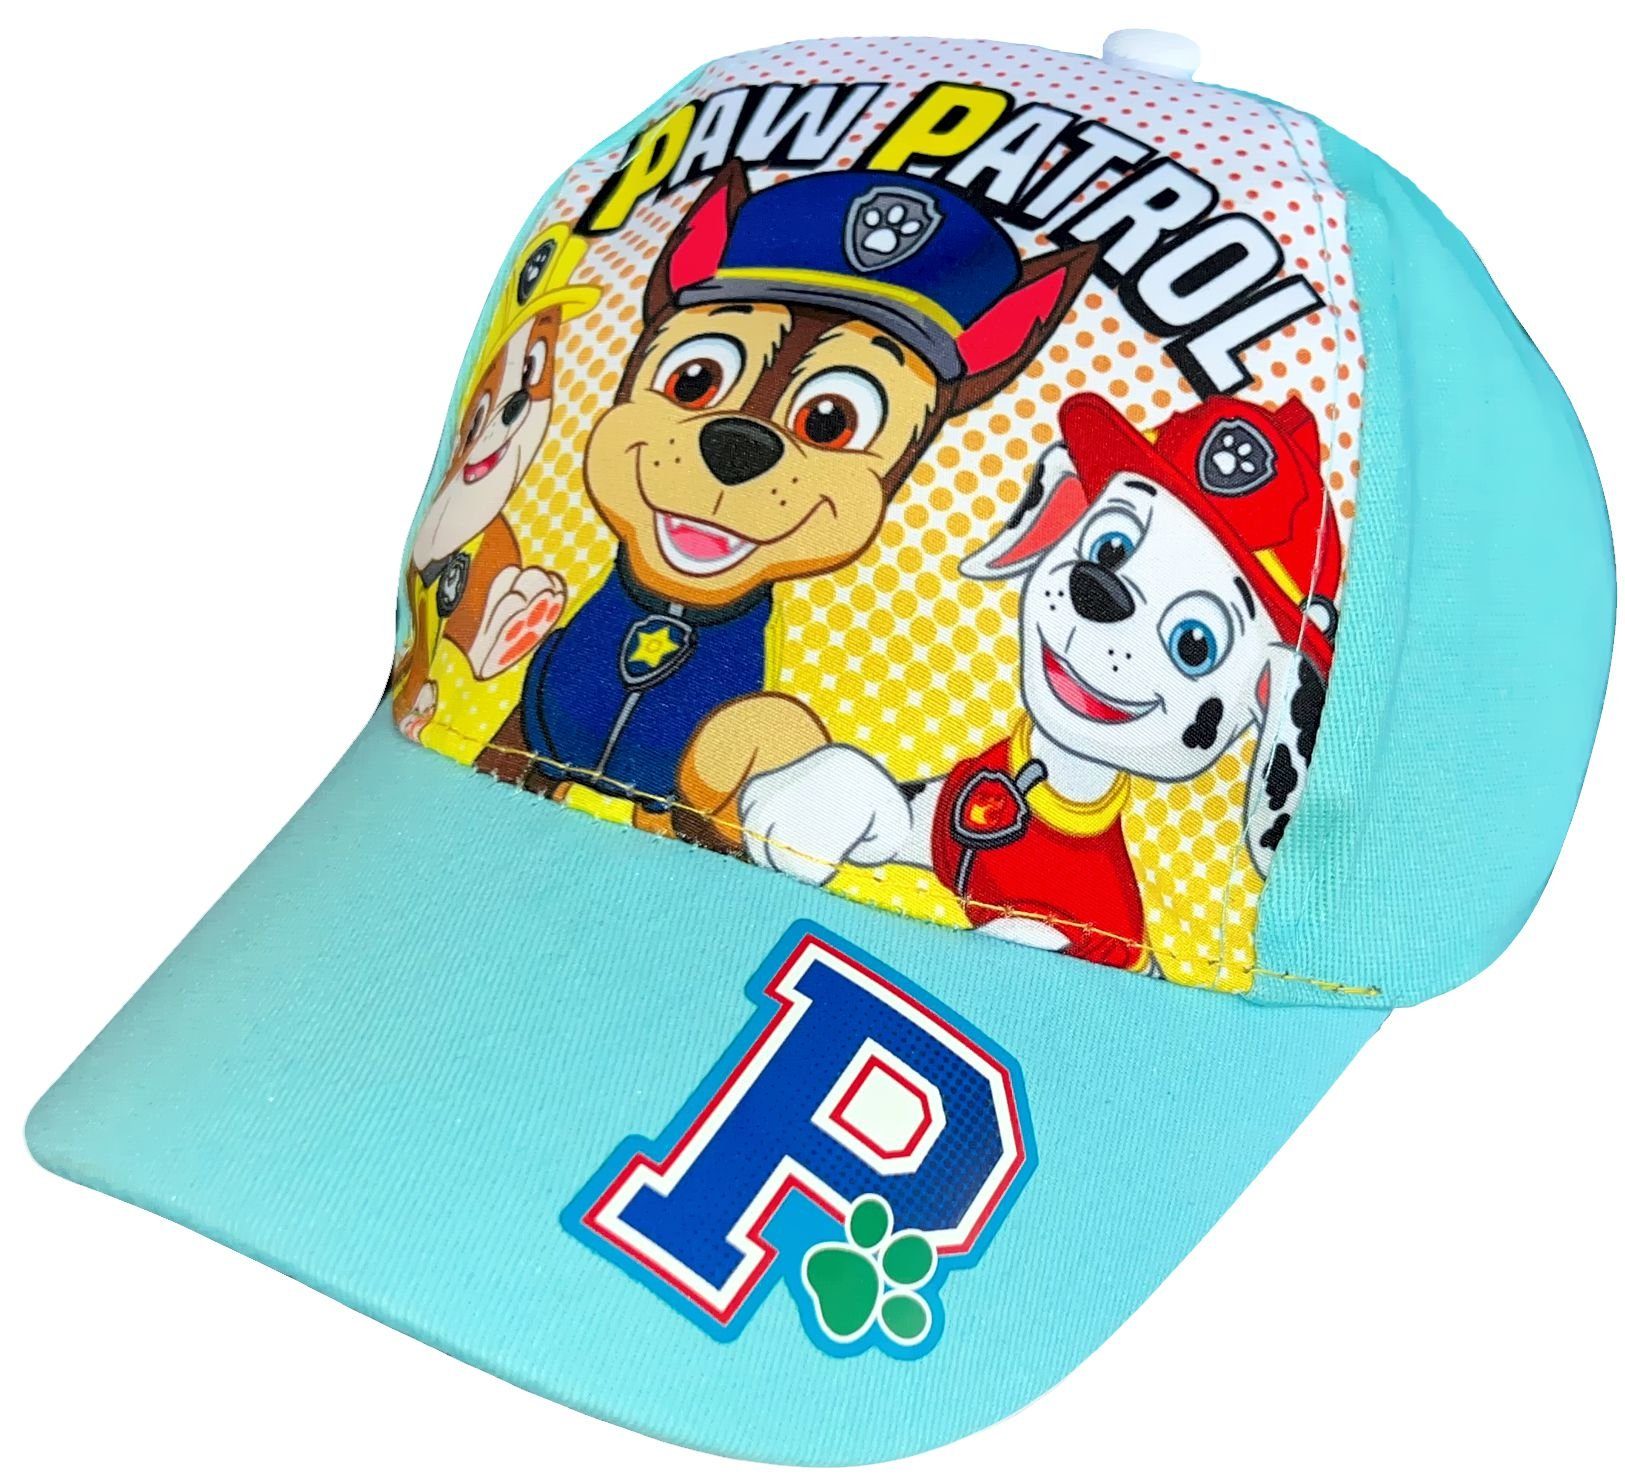 PAW PATROL + Jungen Baseball Schirmmütze PAWPATROL Cap Basecap türkis blau